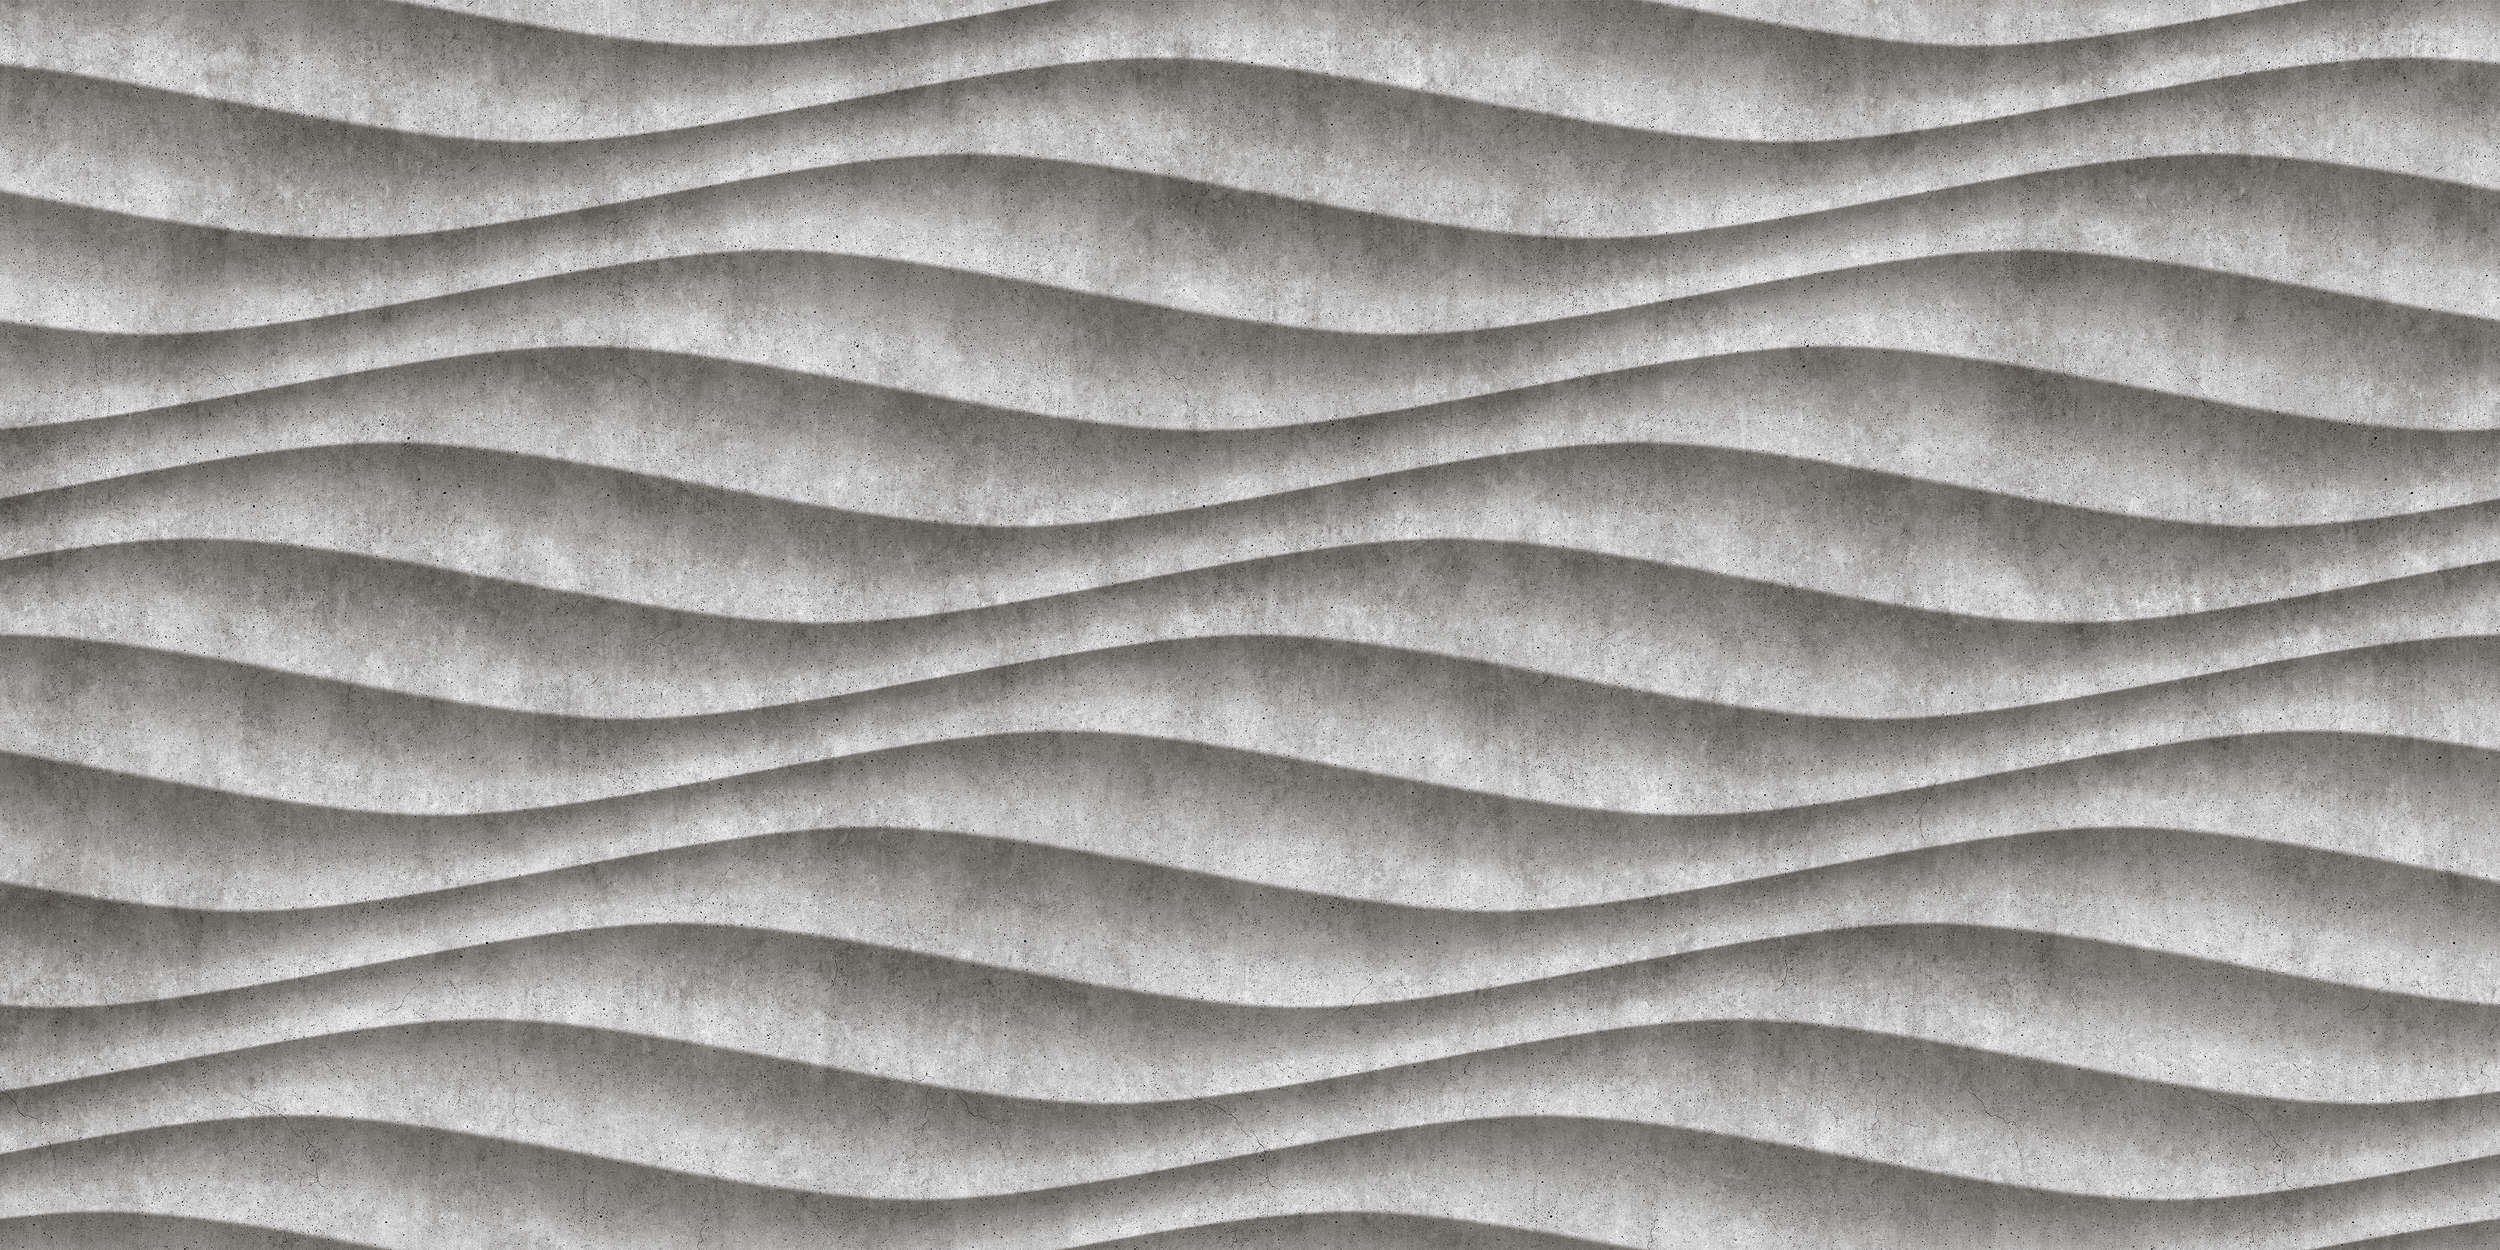             Canyon 2 - Coole 3D Beton-Wellen Fototapete – Grau, Schwarz | Struktur Vlies
        